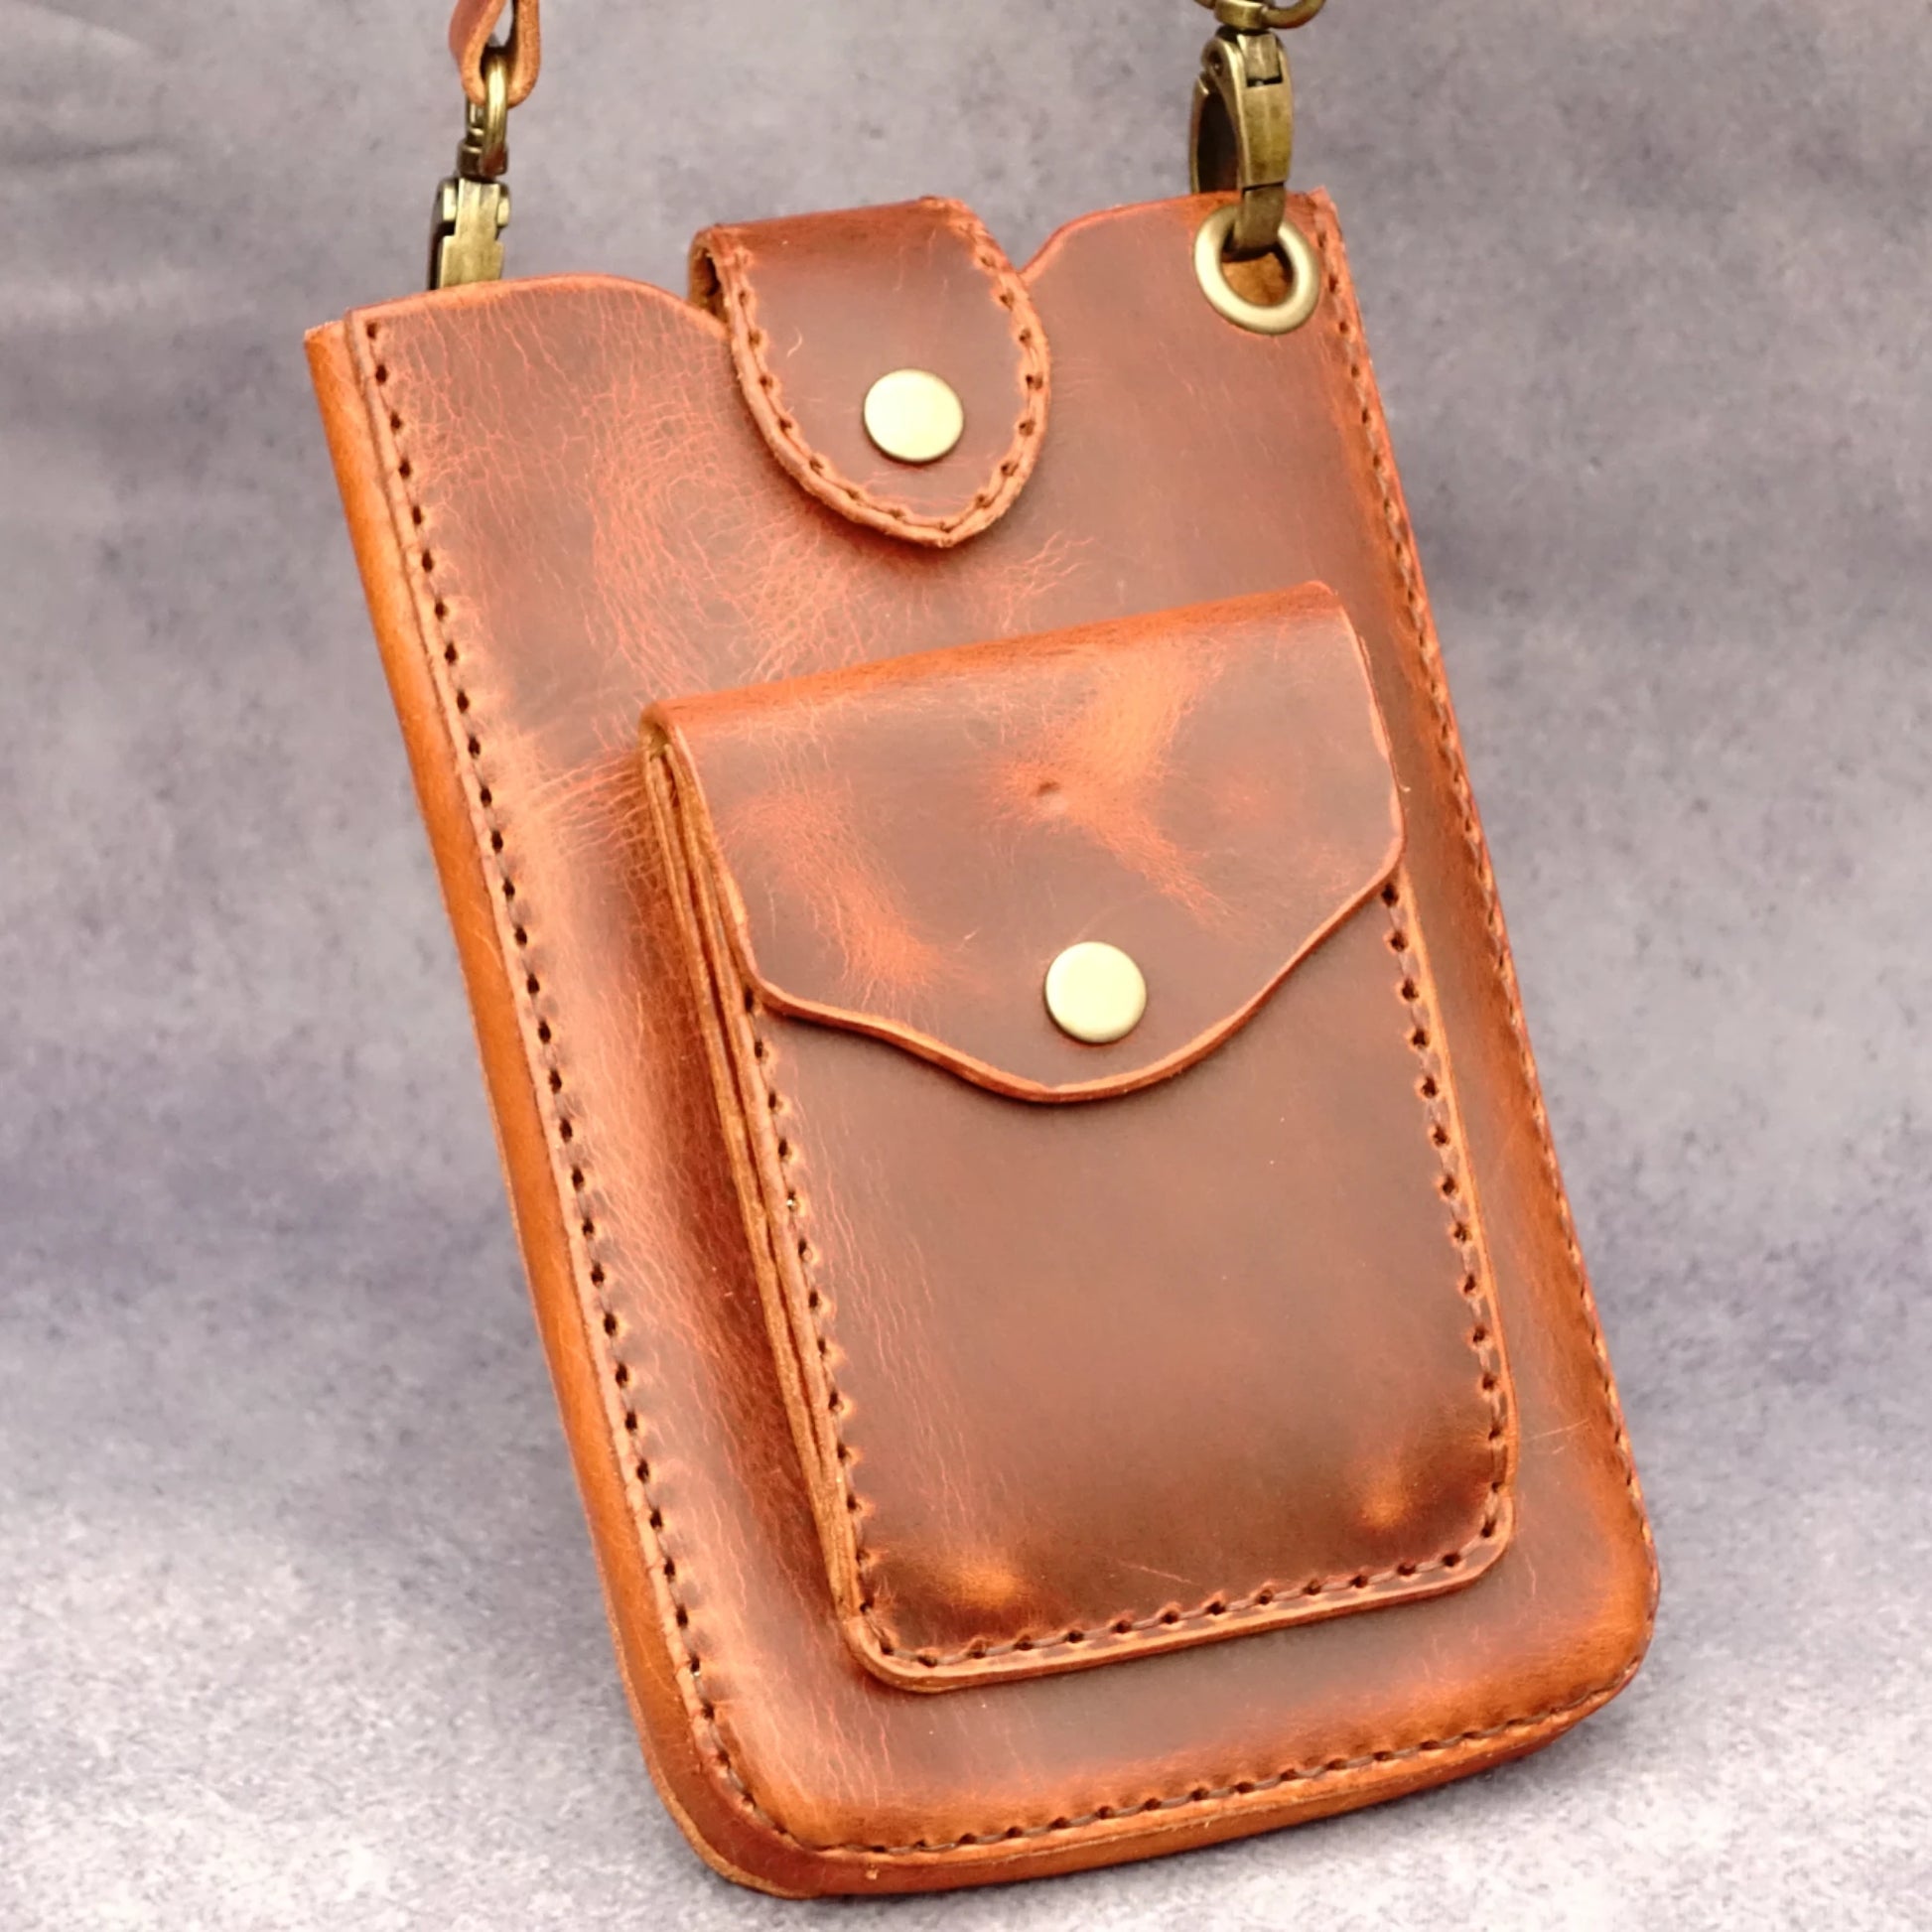 M Handmade Leather Crossbody Bag - Brown rgc handmade crafts3